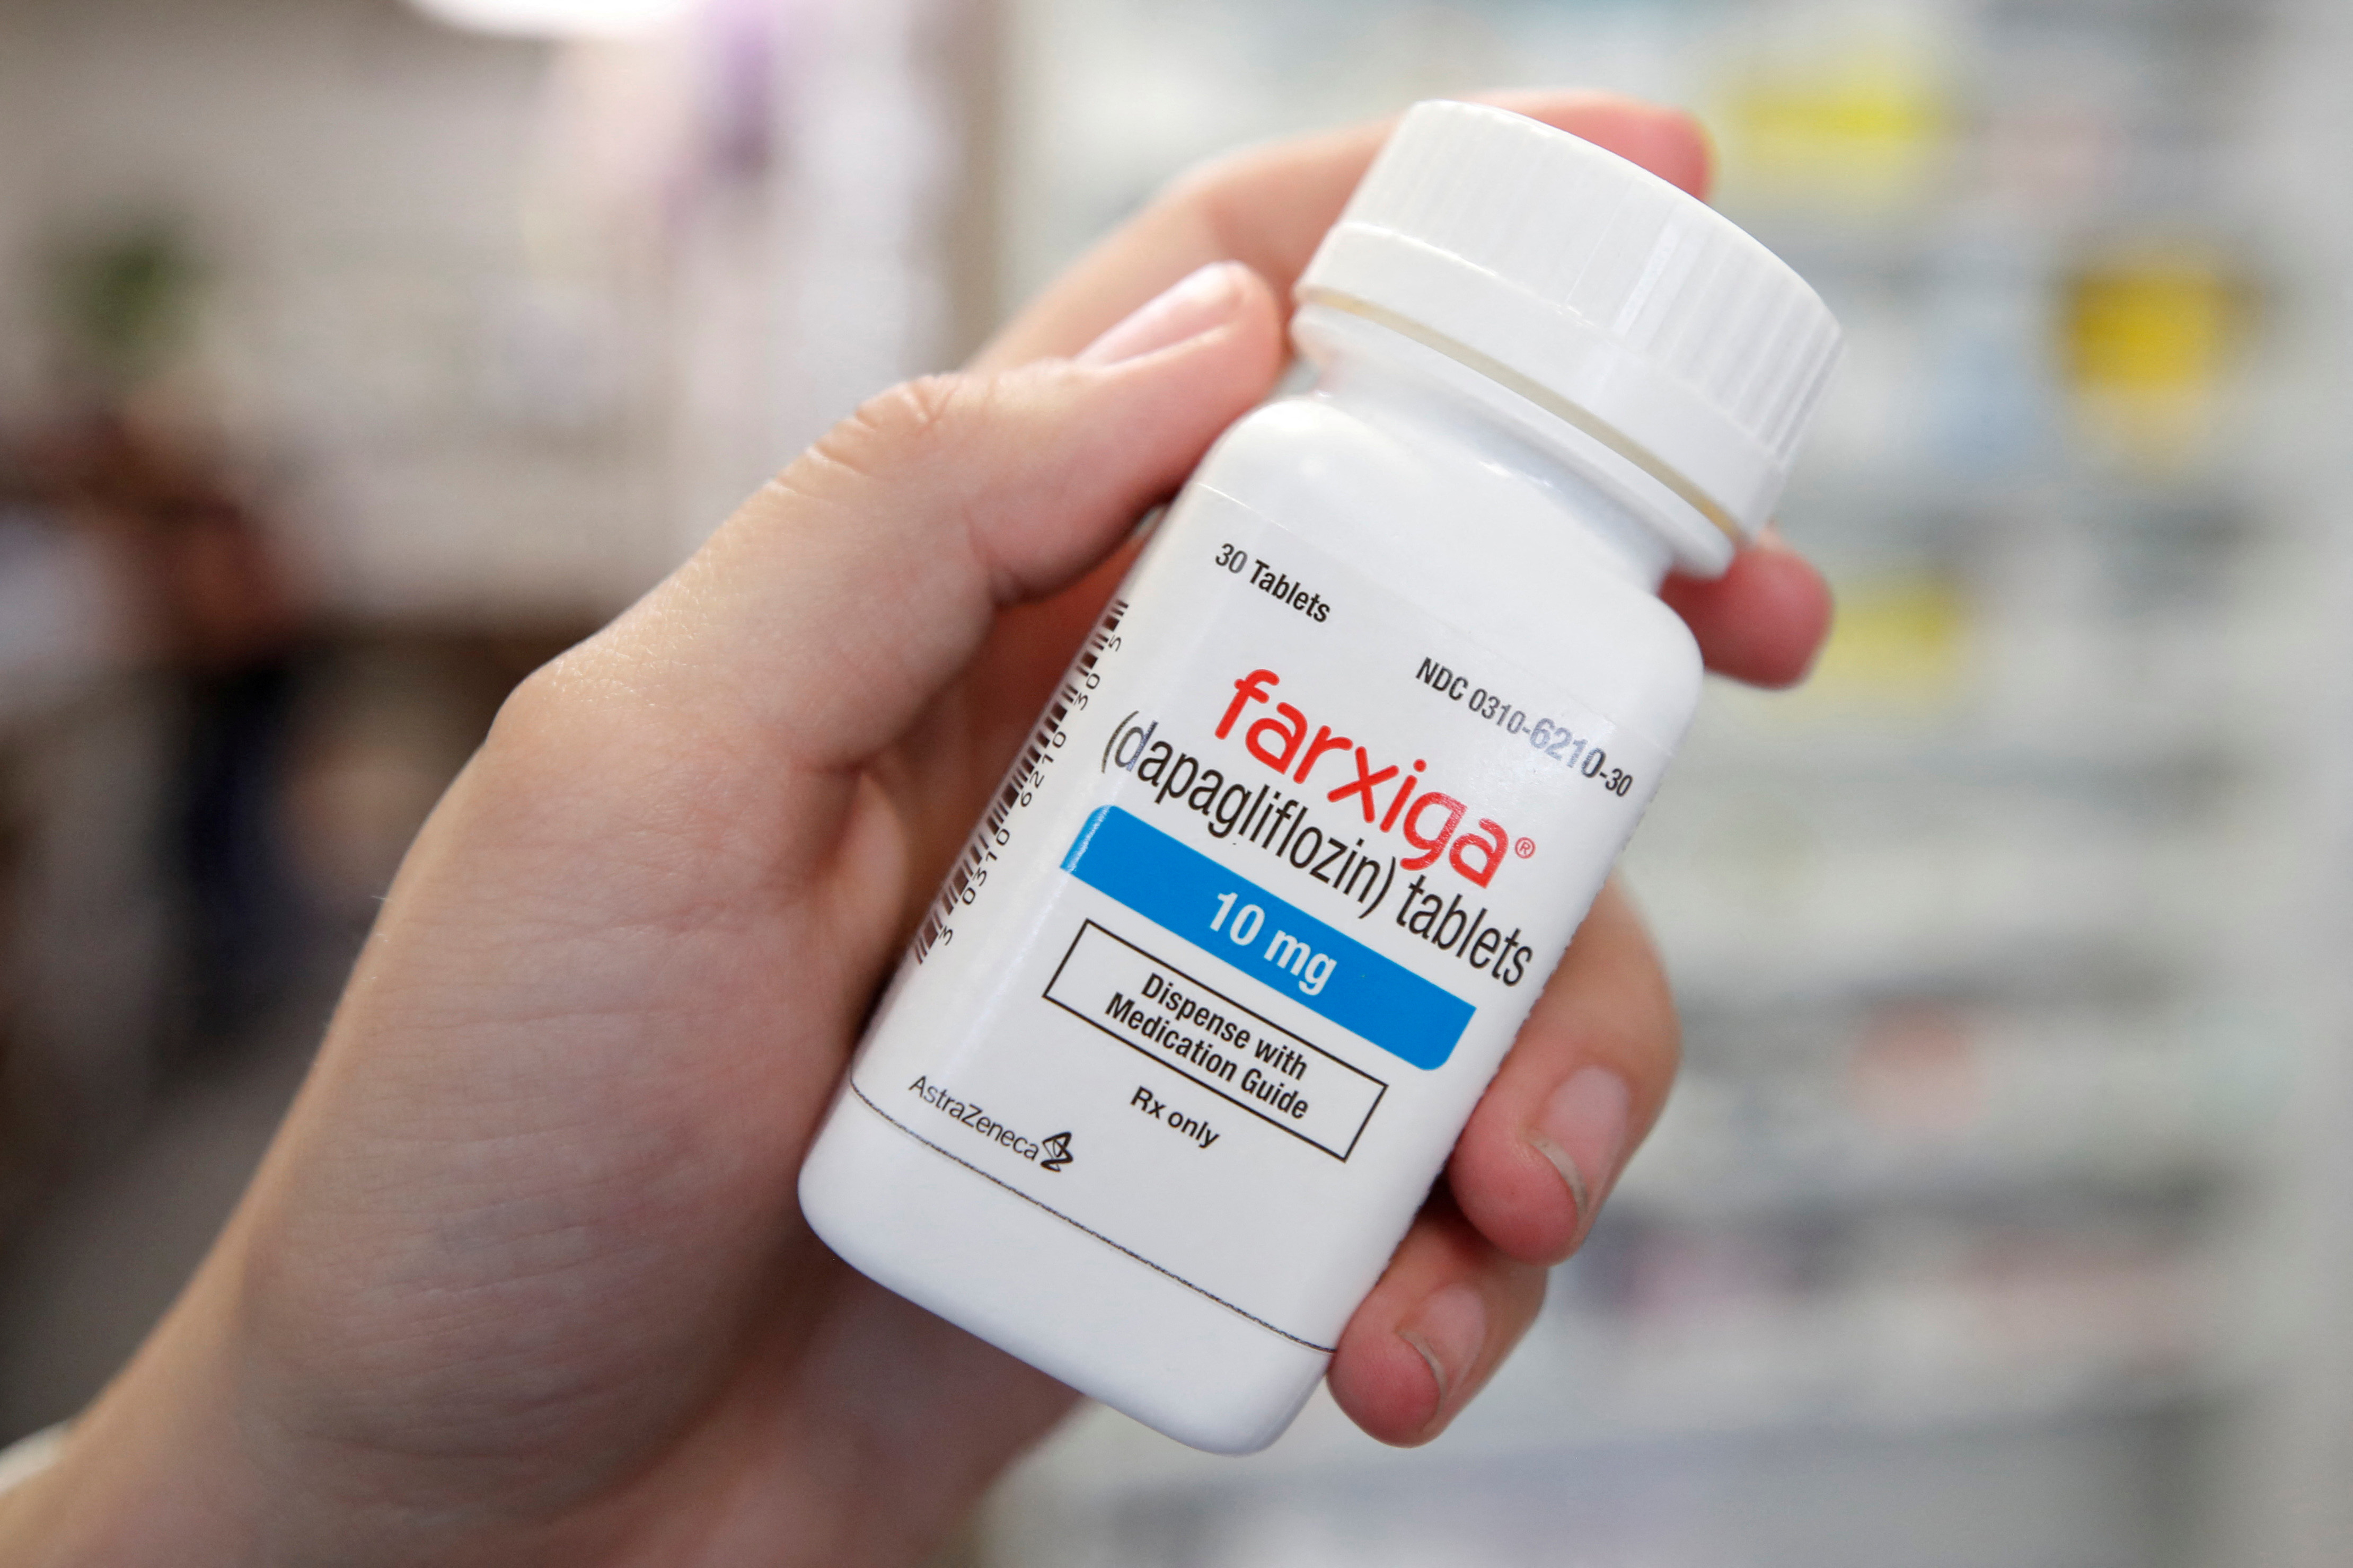 Diabetes drug Farxiga (dapagliflozin) is displayed at a pharmacy in Provo